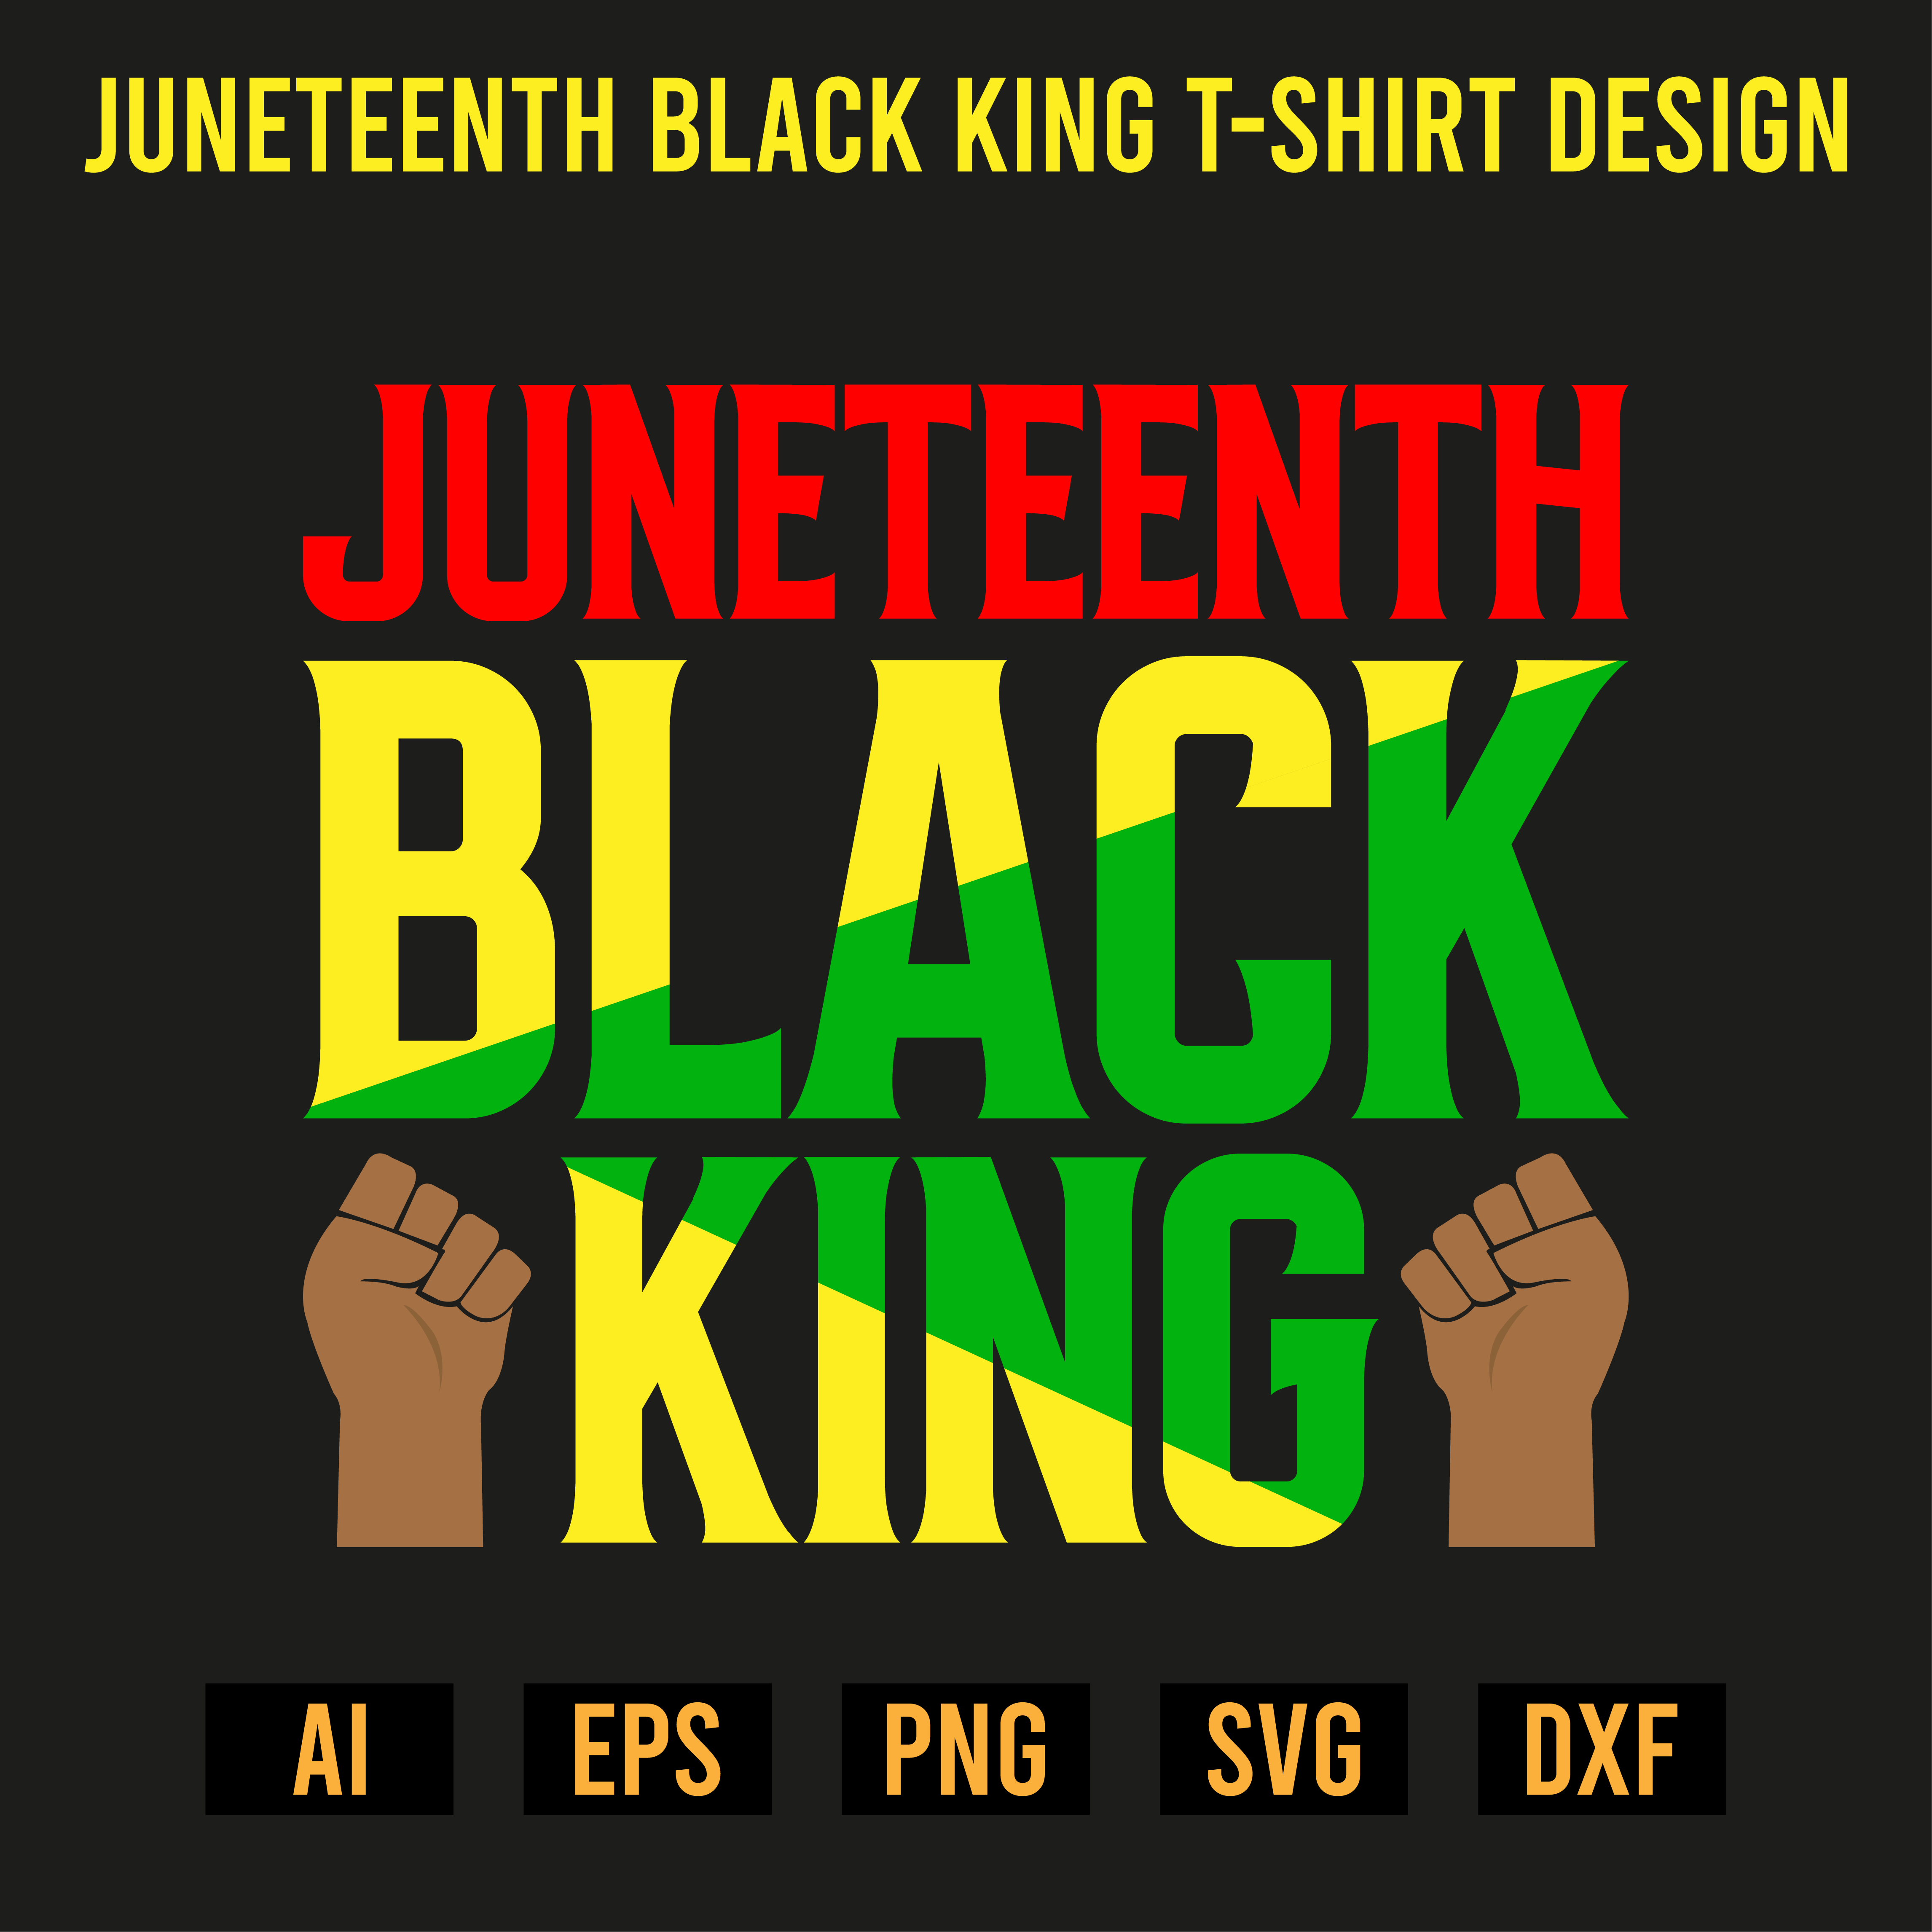 Juneteenth Black King T-Shirt Design preview image.